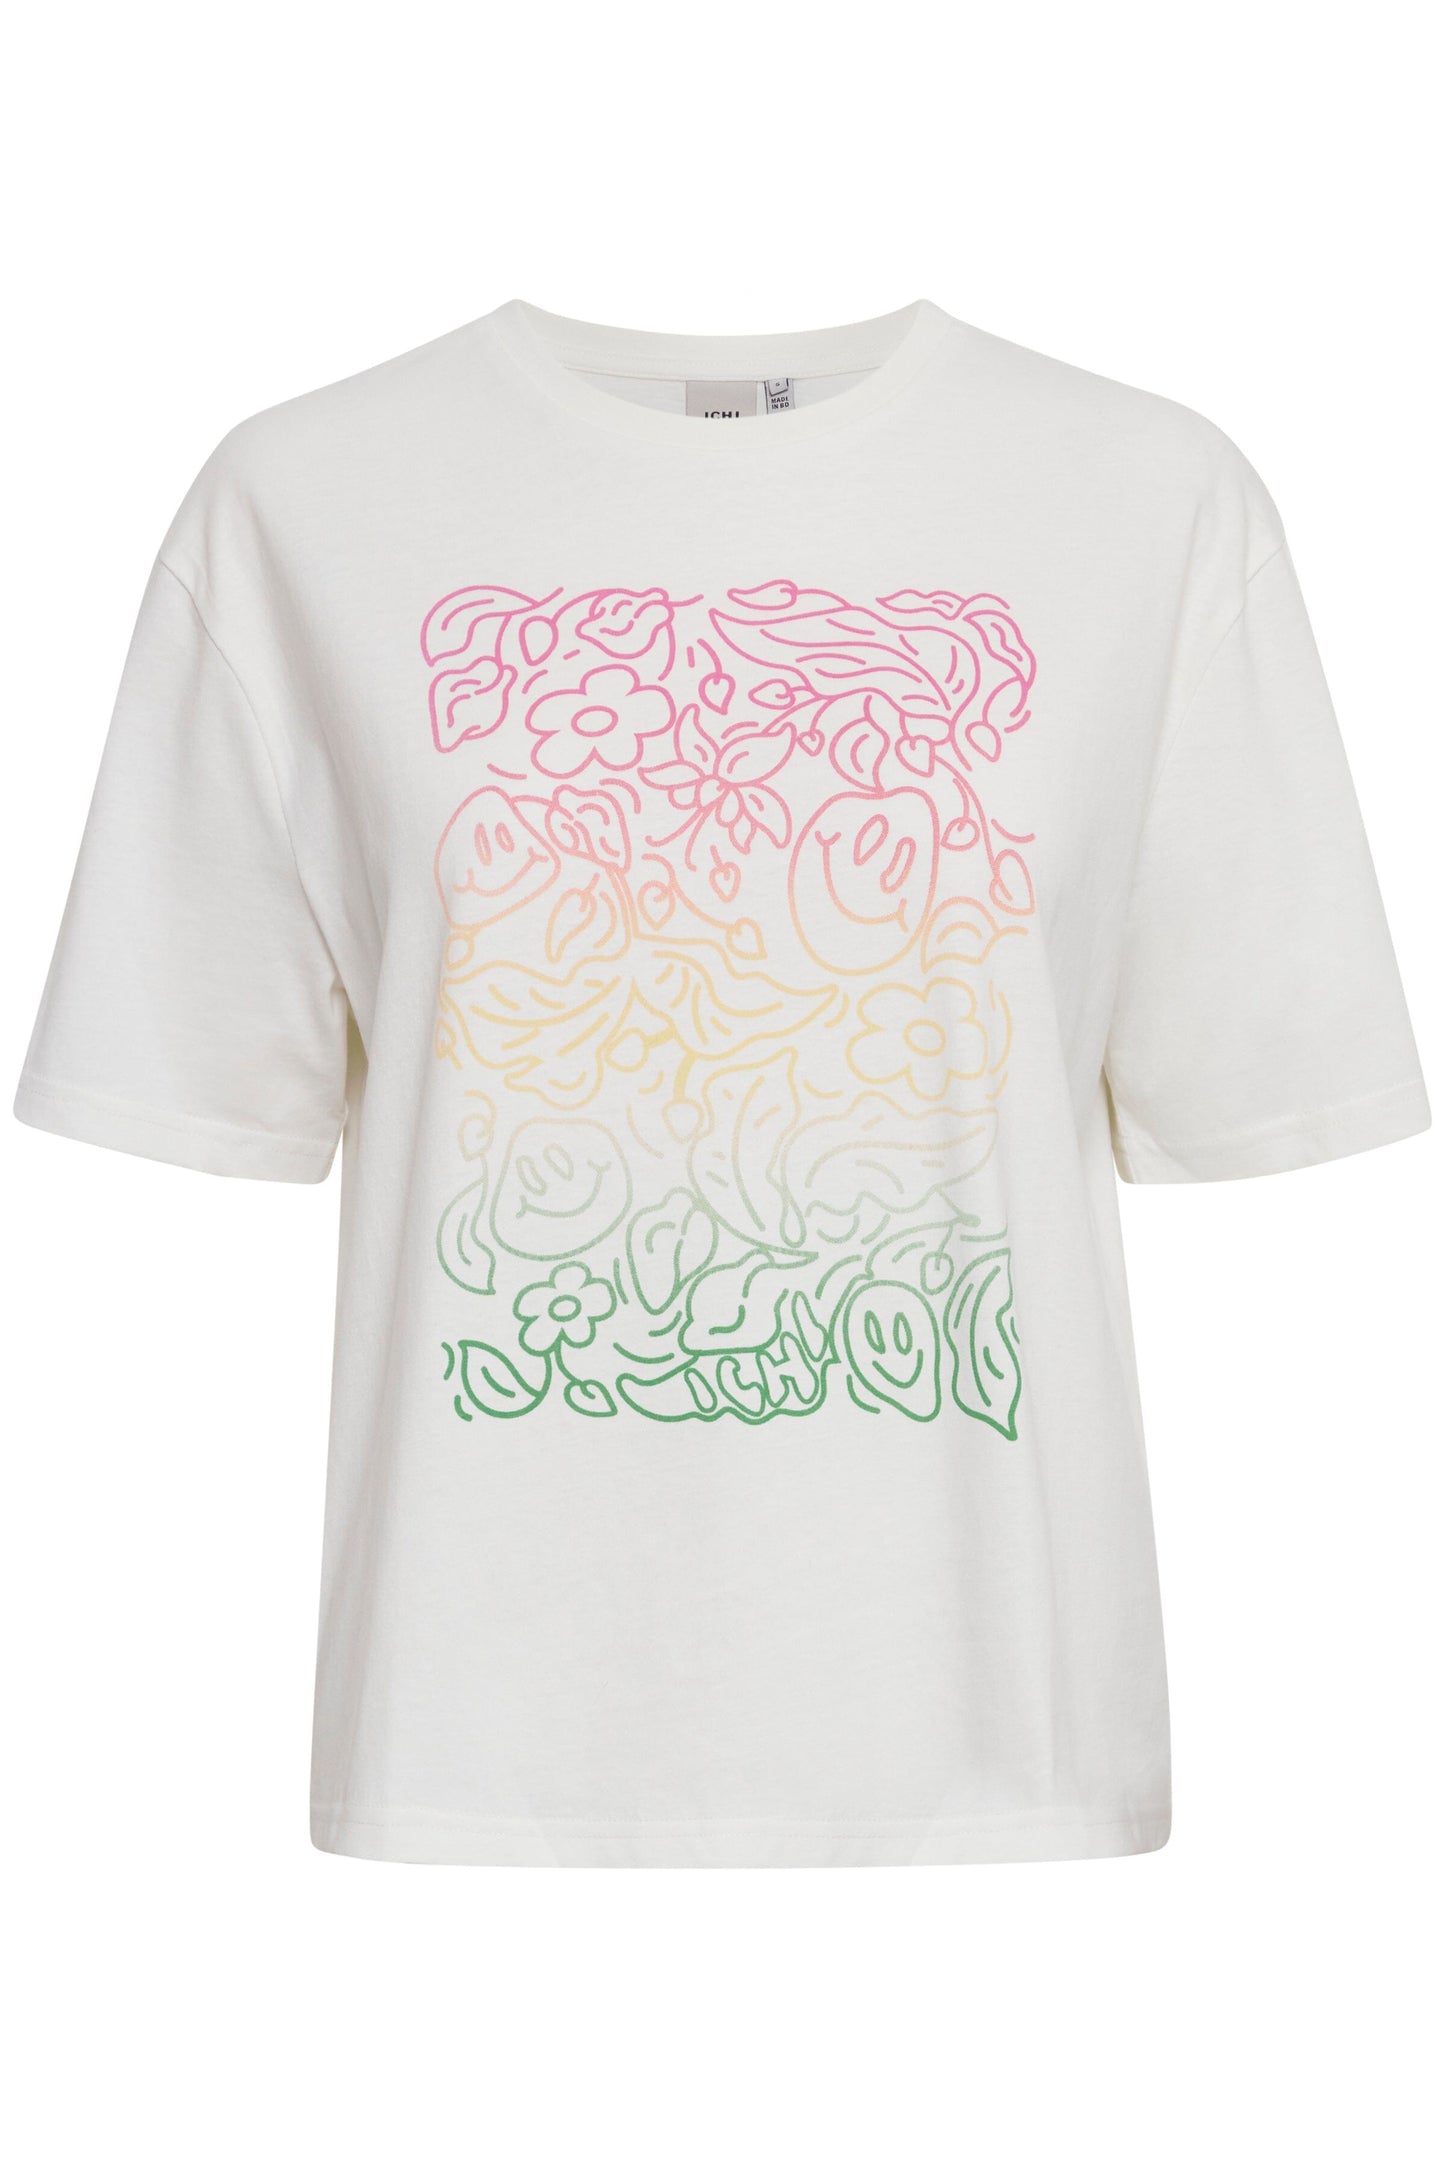 Runela T-shirt in Cloud Dancer White T-Shirt Ichi 